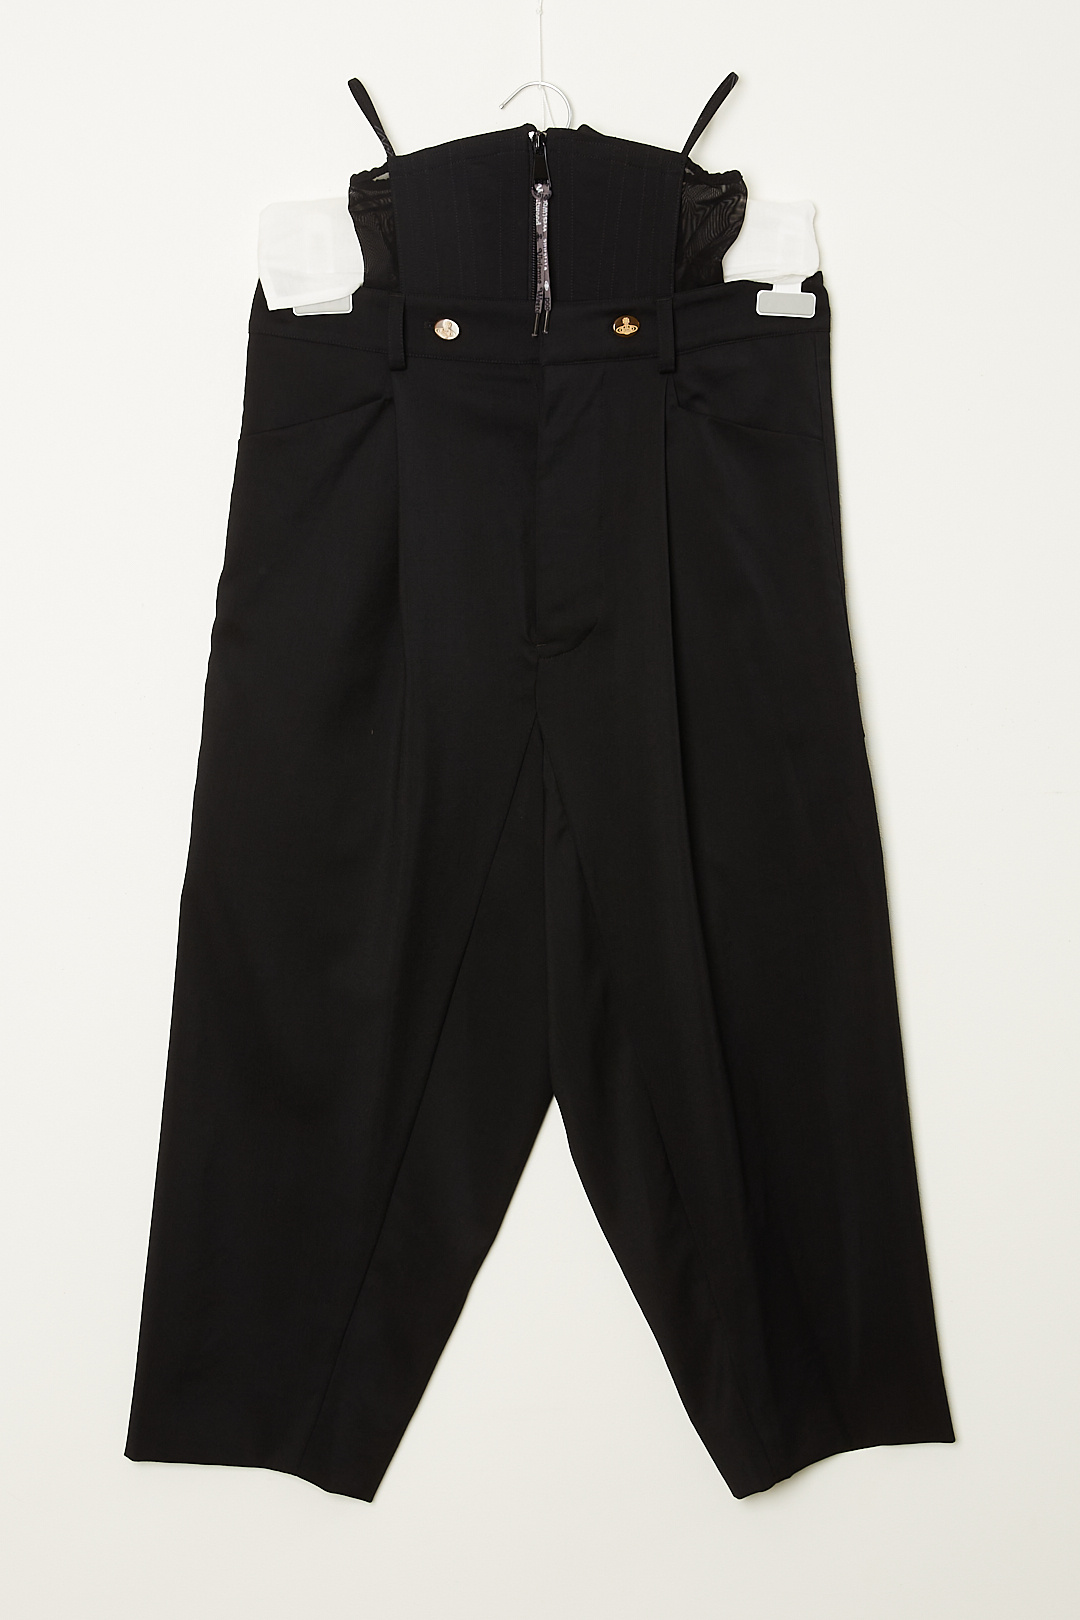 Vivienne Westwood Macca corset trousers